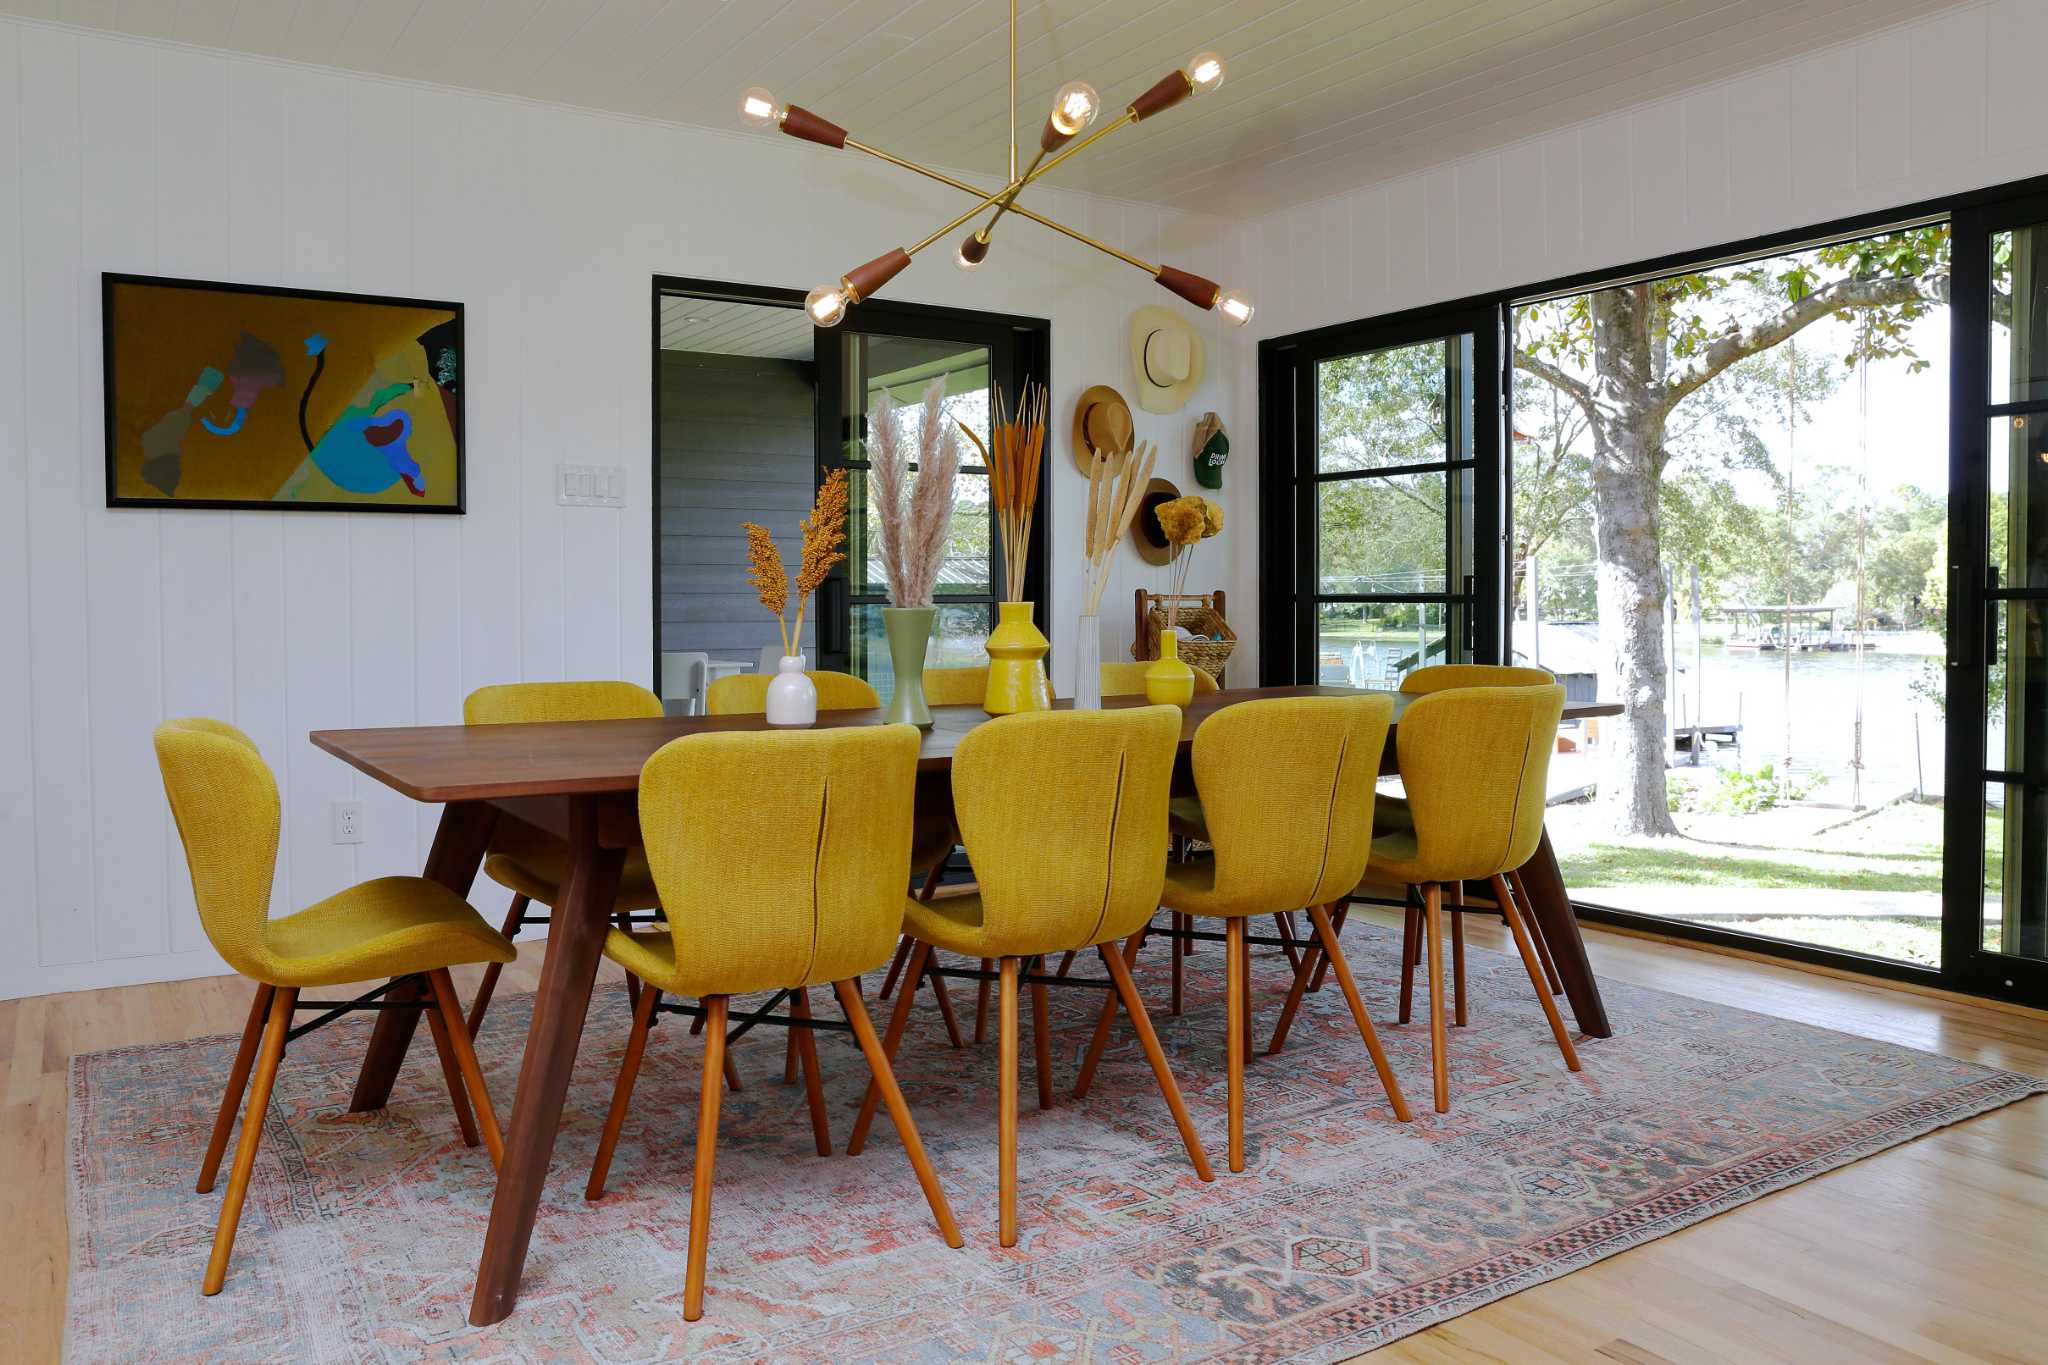 Houston real estate broker Bill Baldwin fulfills childhood dream with Sunset Lake house